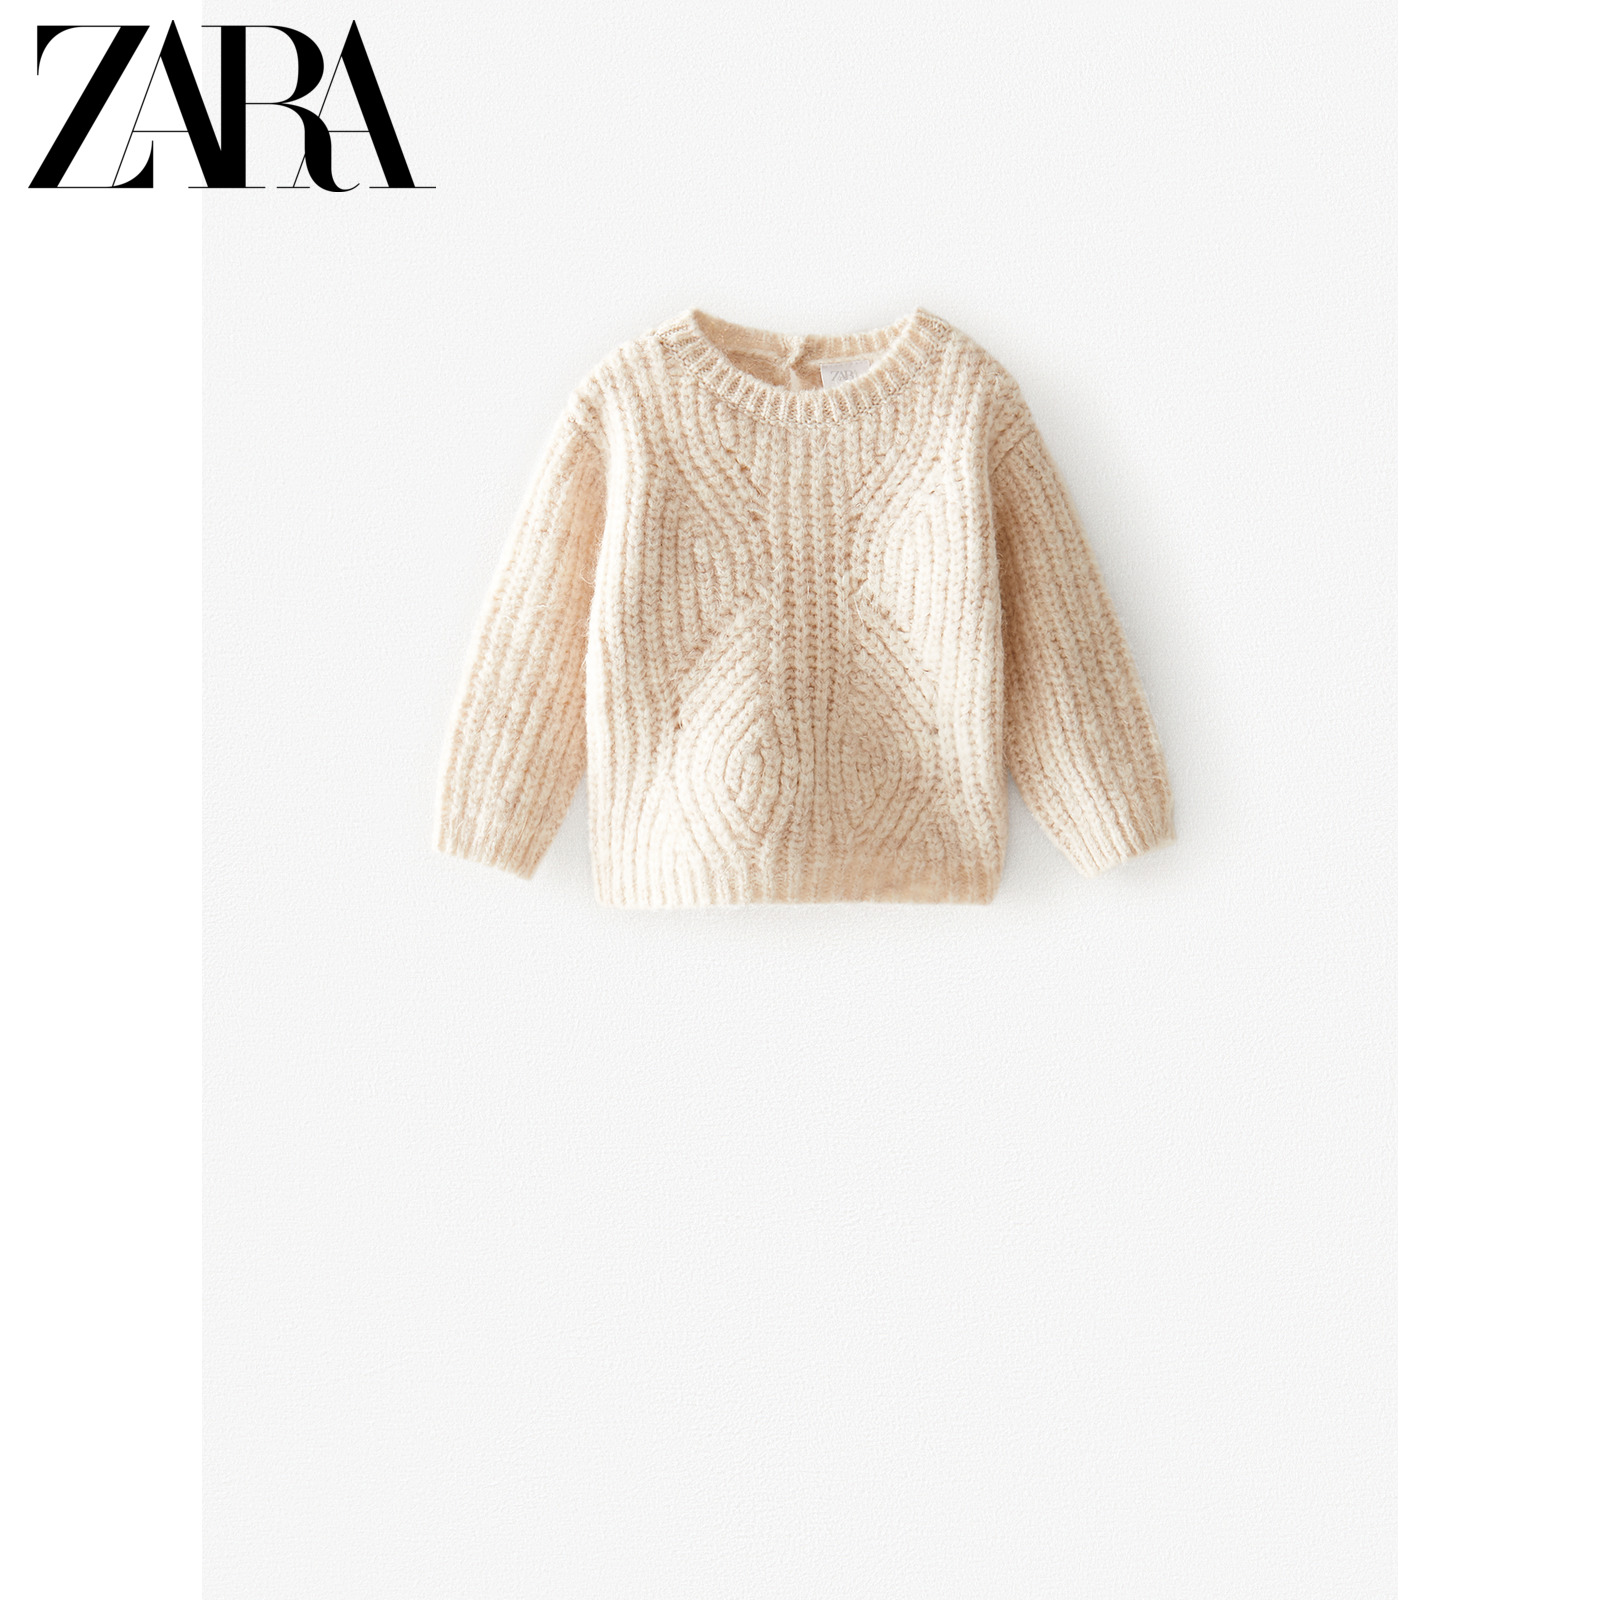 ZARA 鼠年新年新款 女婴幼童 量规图案针织衫毛衣 03335026712,降价幅度60.3%